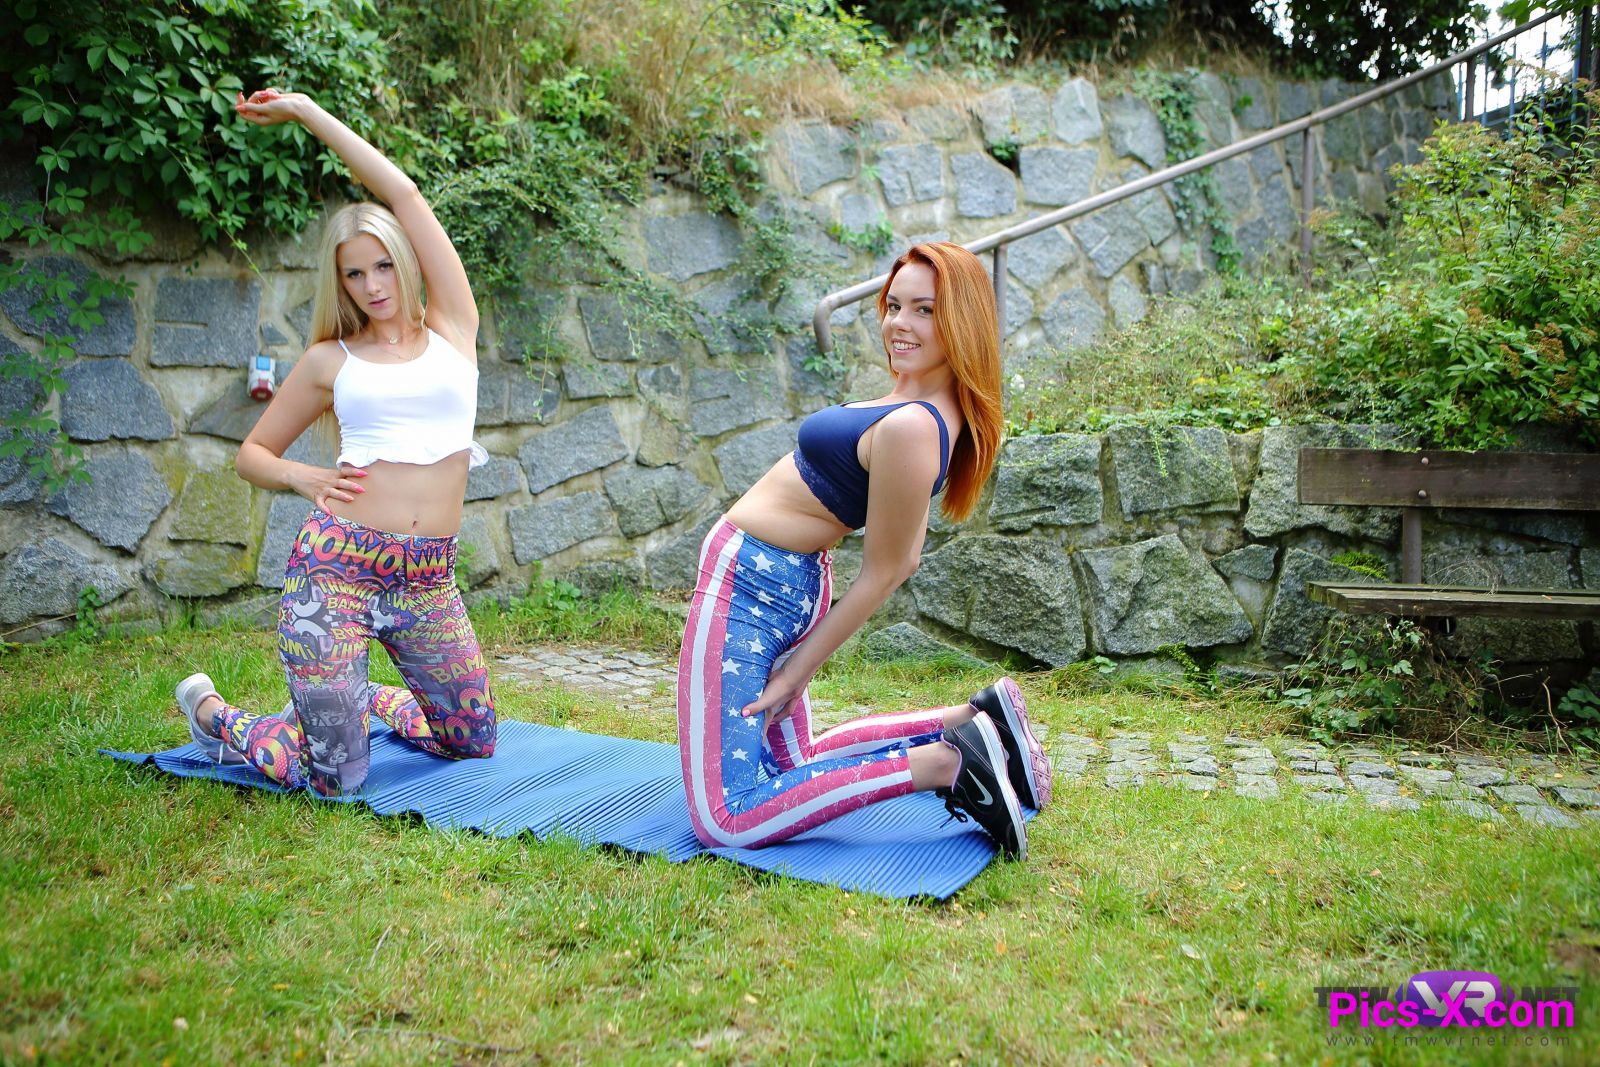 Yoga lesbians orgasm outdoors - TmwVRnet.com - Image 41